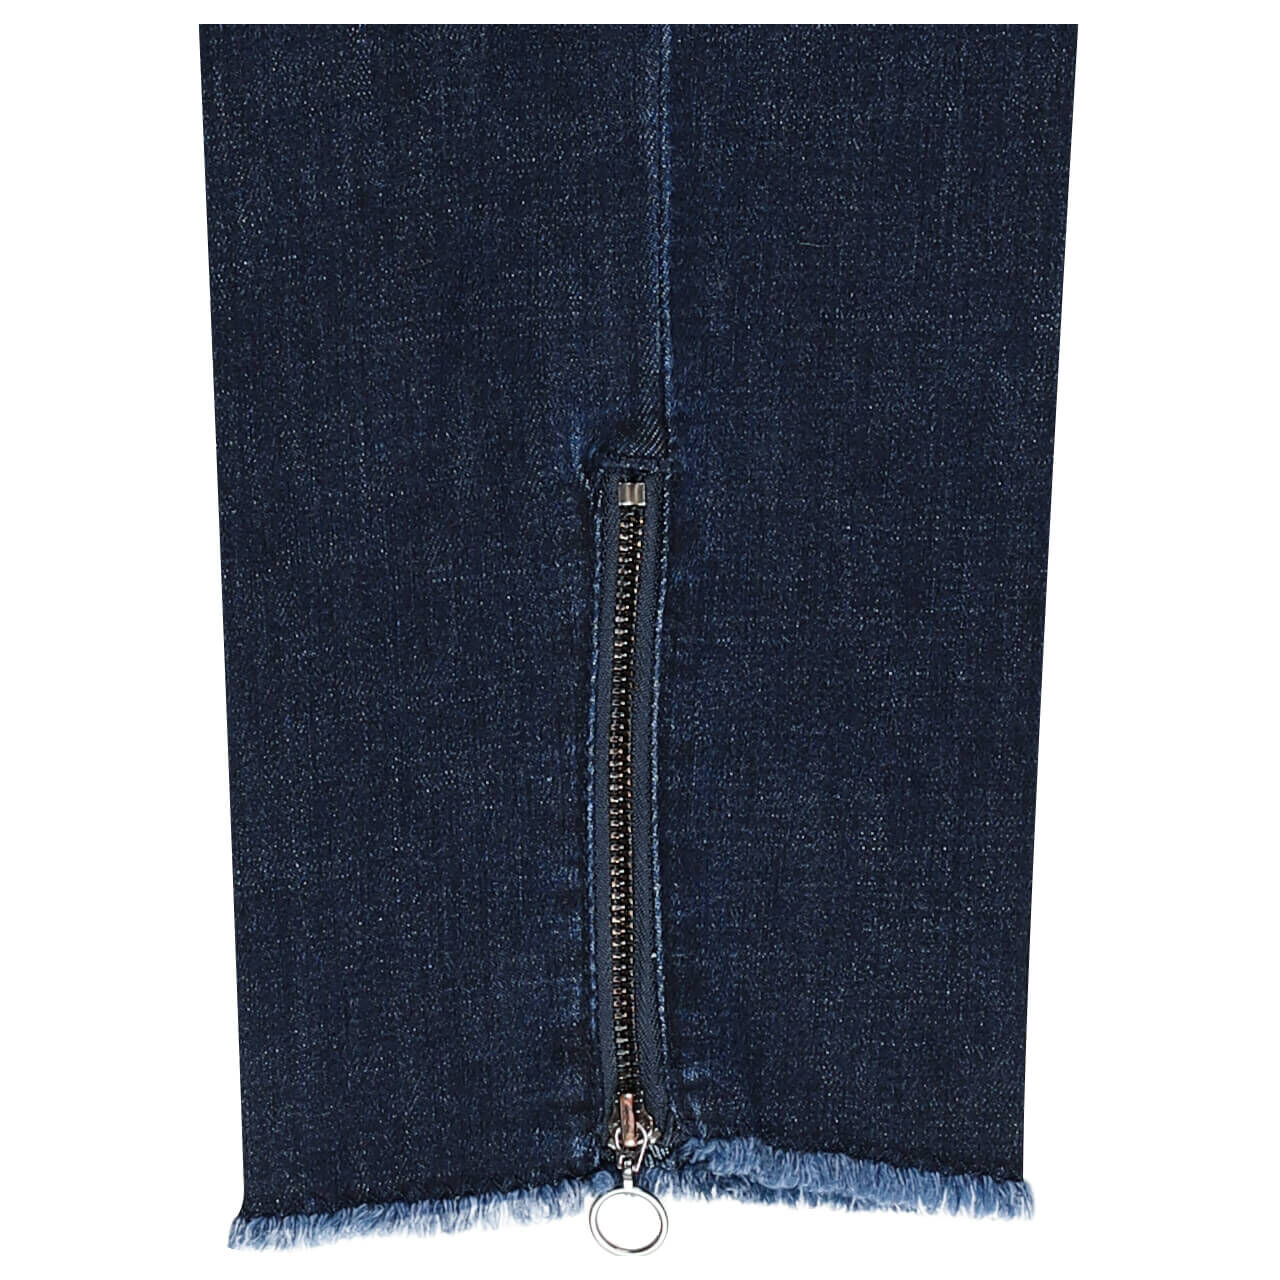 MAC Rich Slim 7/8 Jeans dark authentic blue